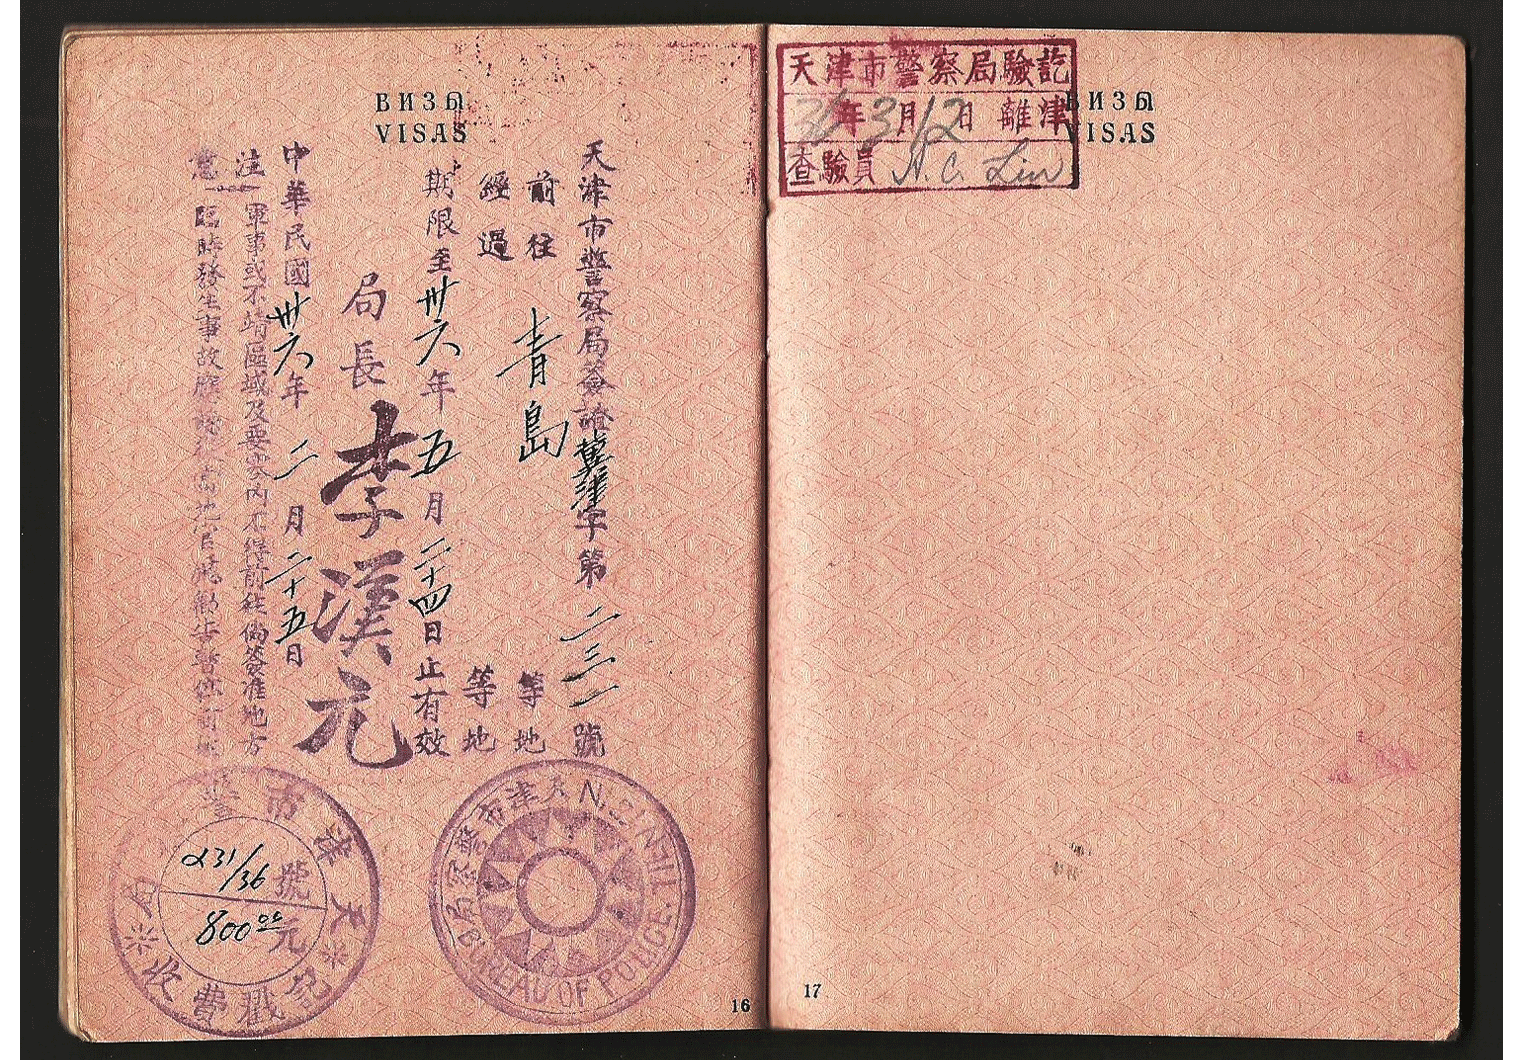 WW2 Soviet passport